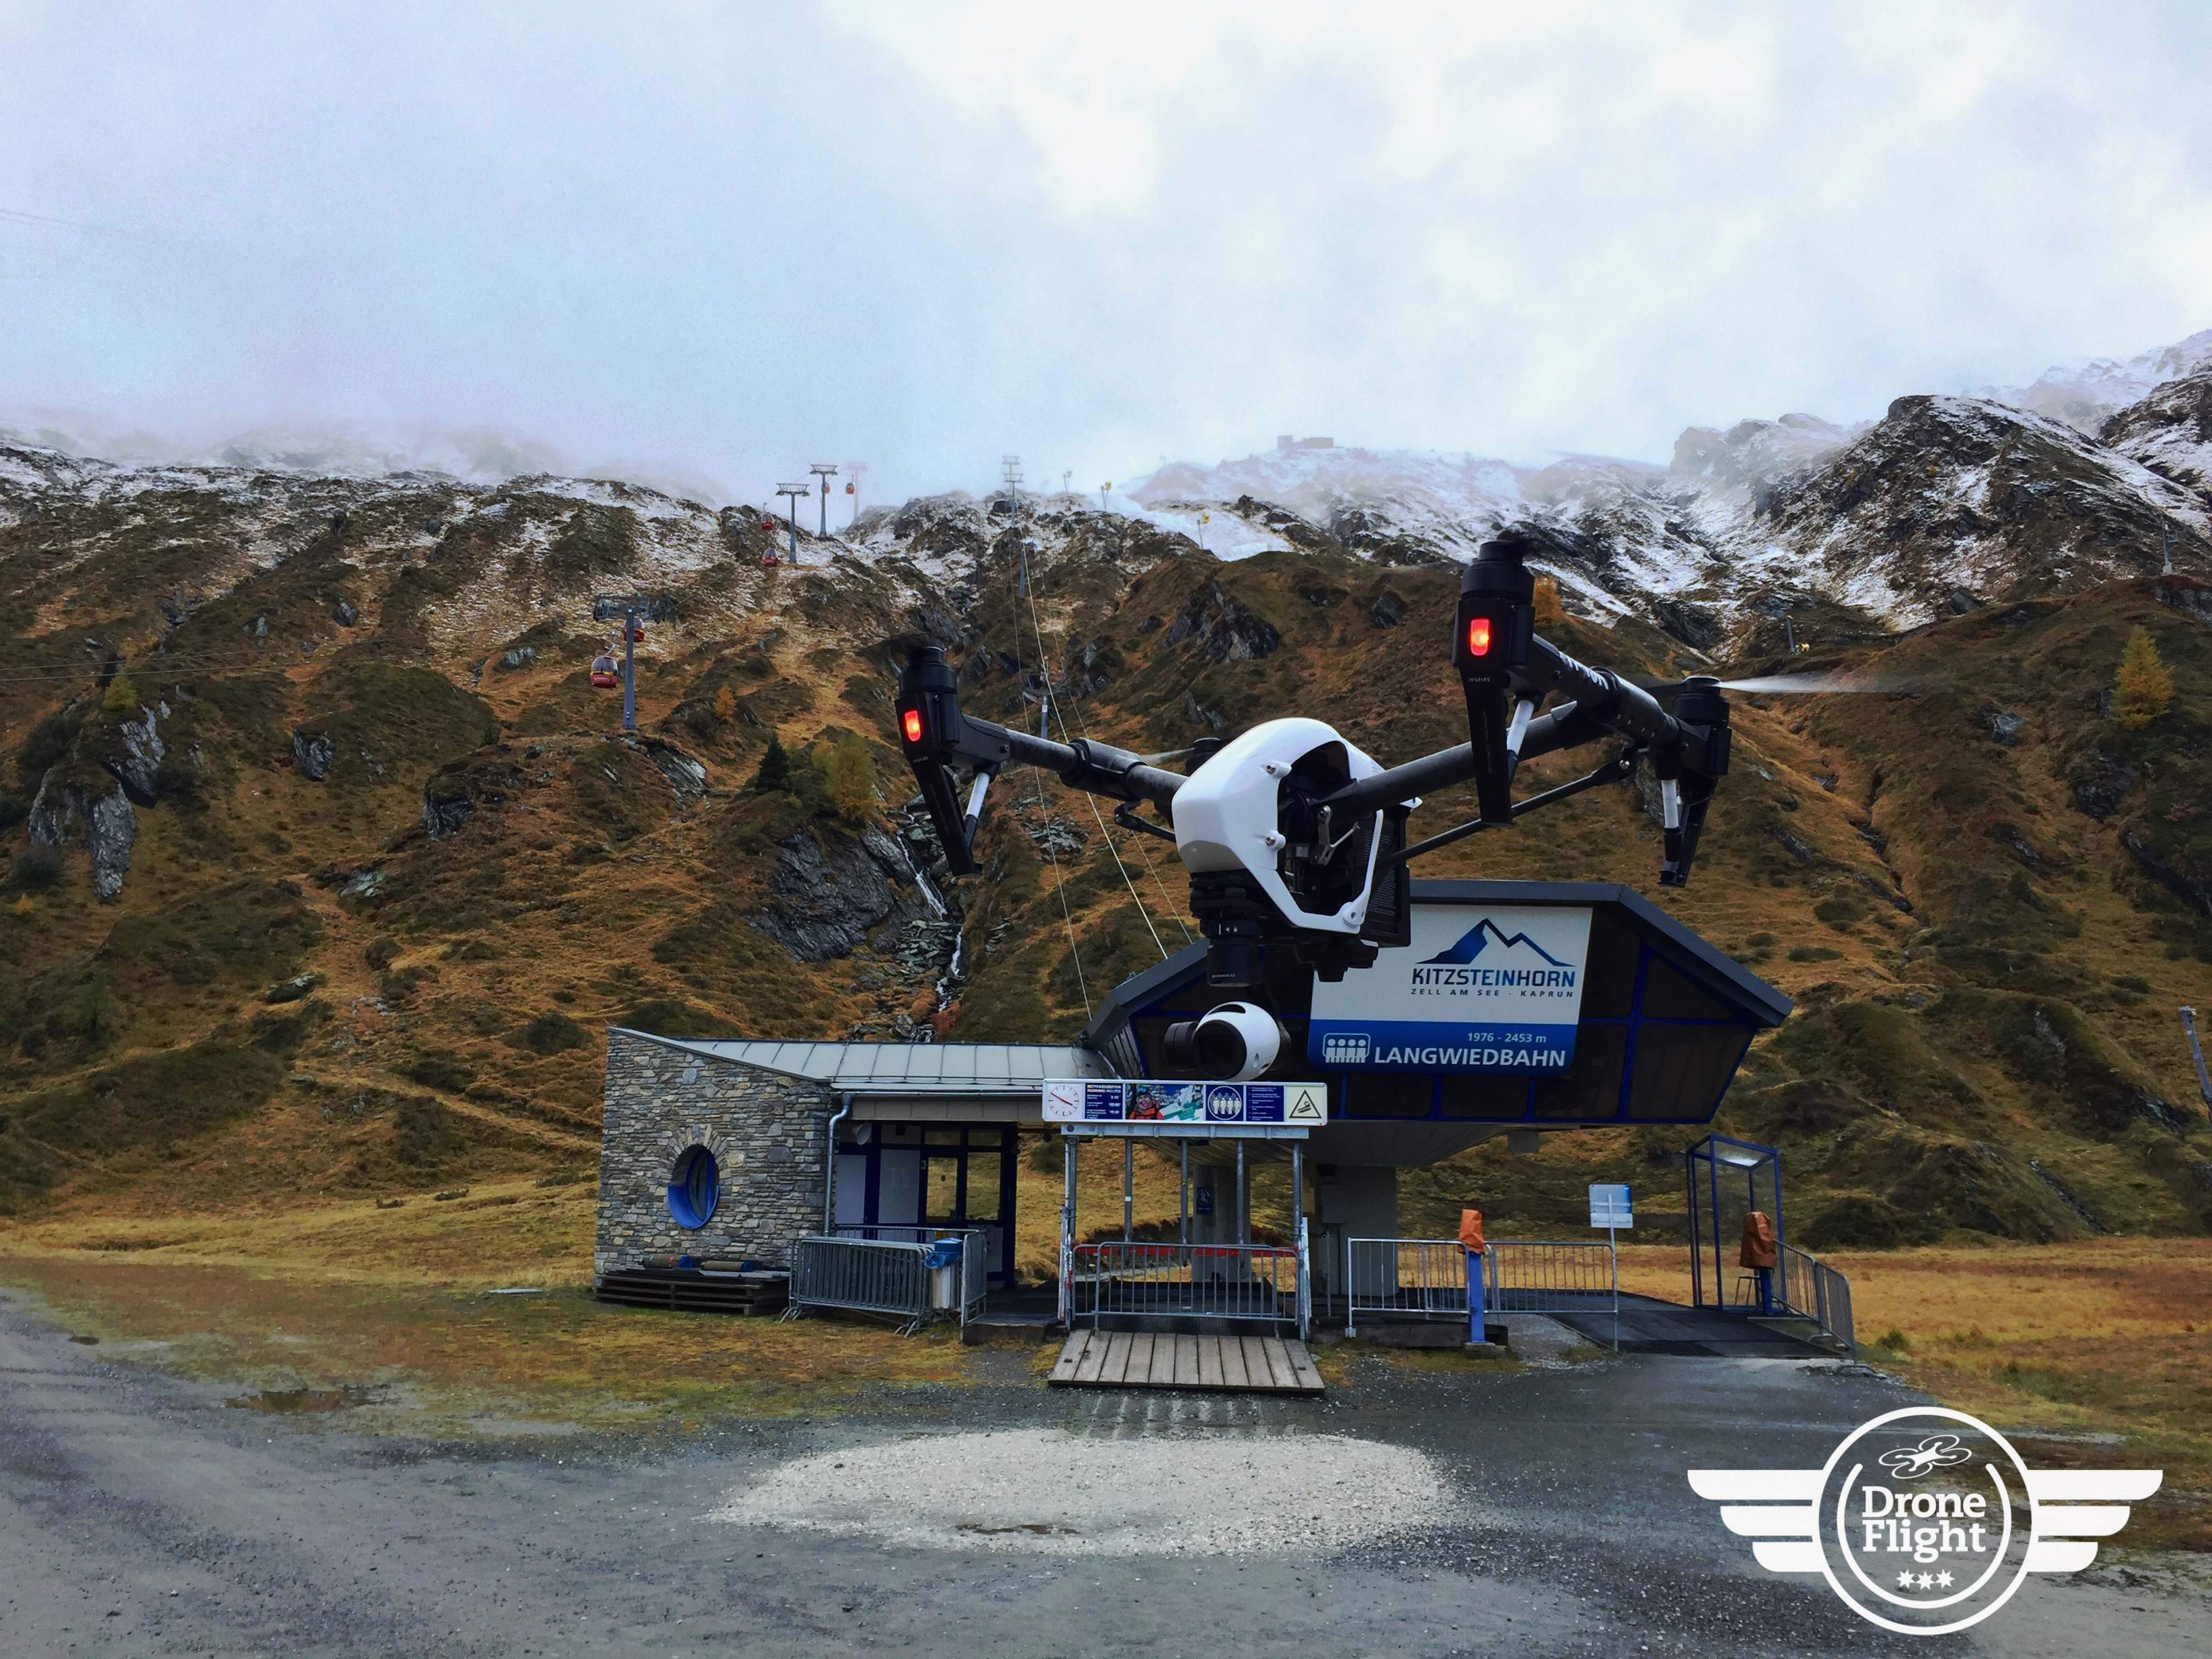 Drone-Flight Alps Alpen